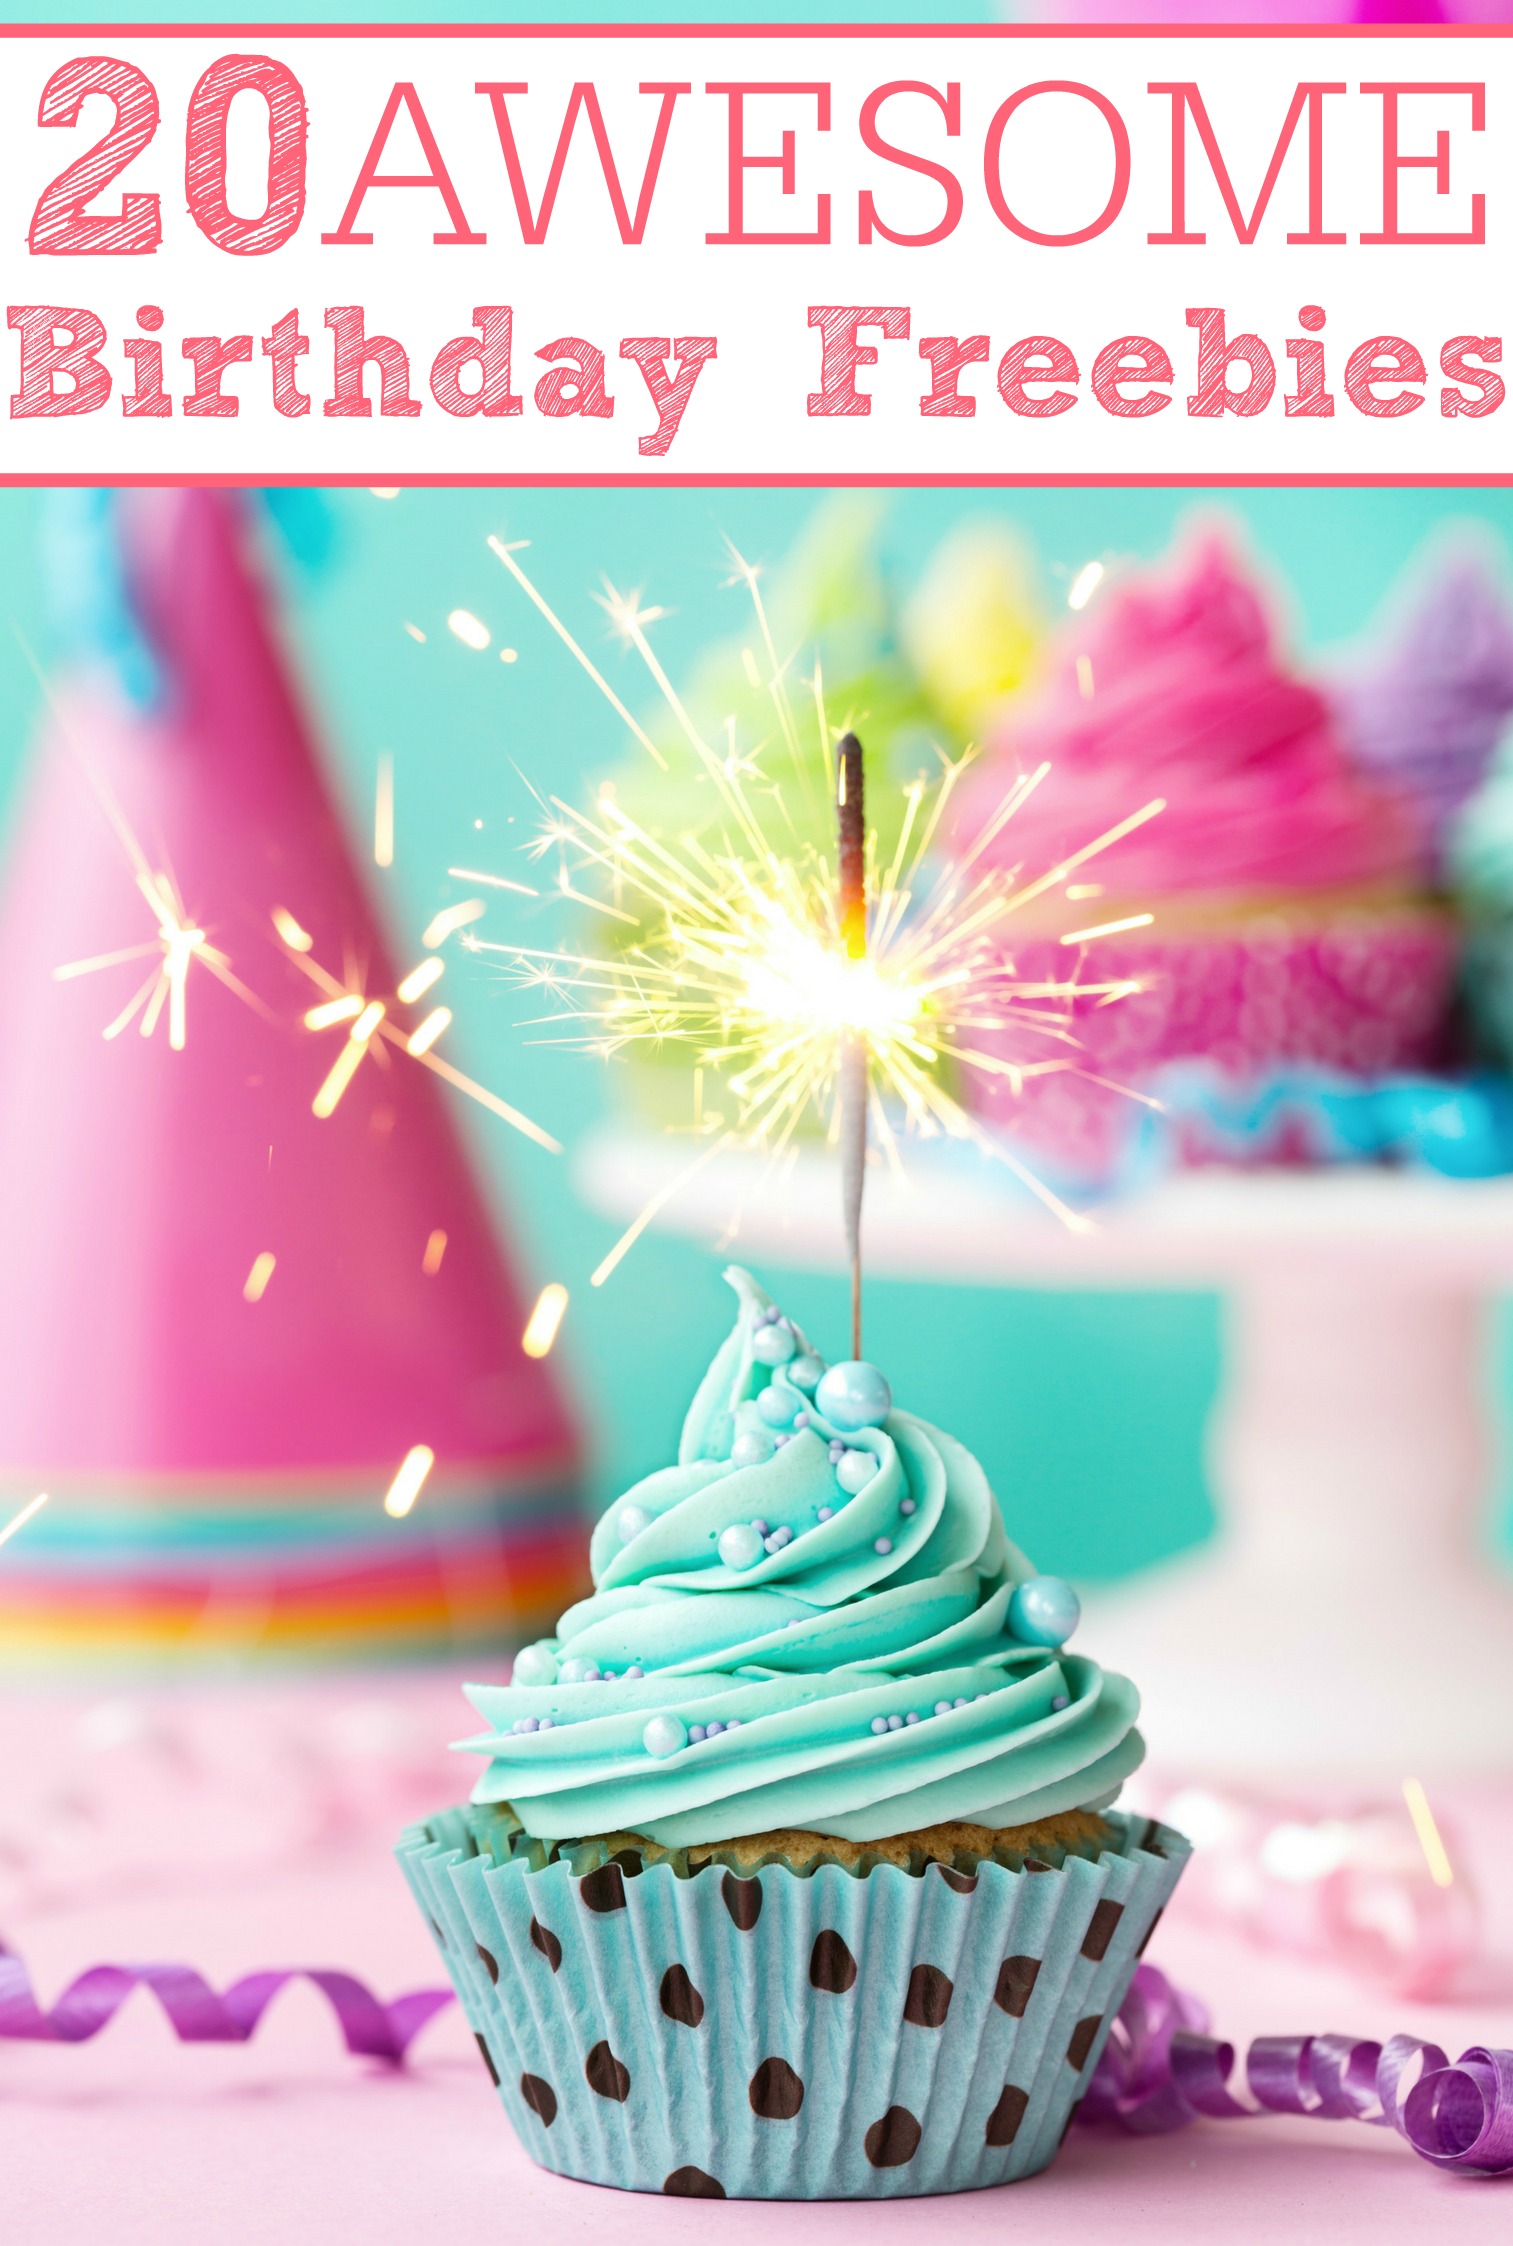 Free Birthday Freebies